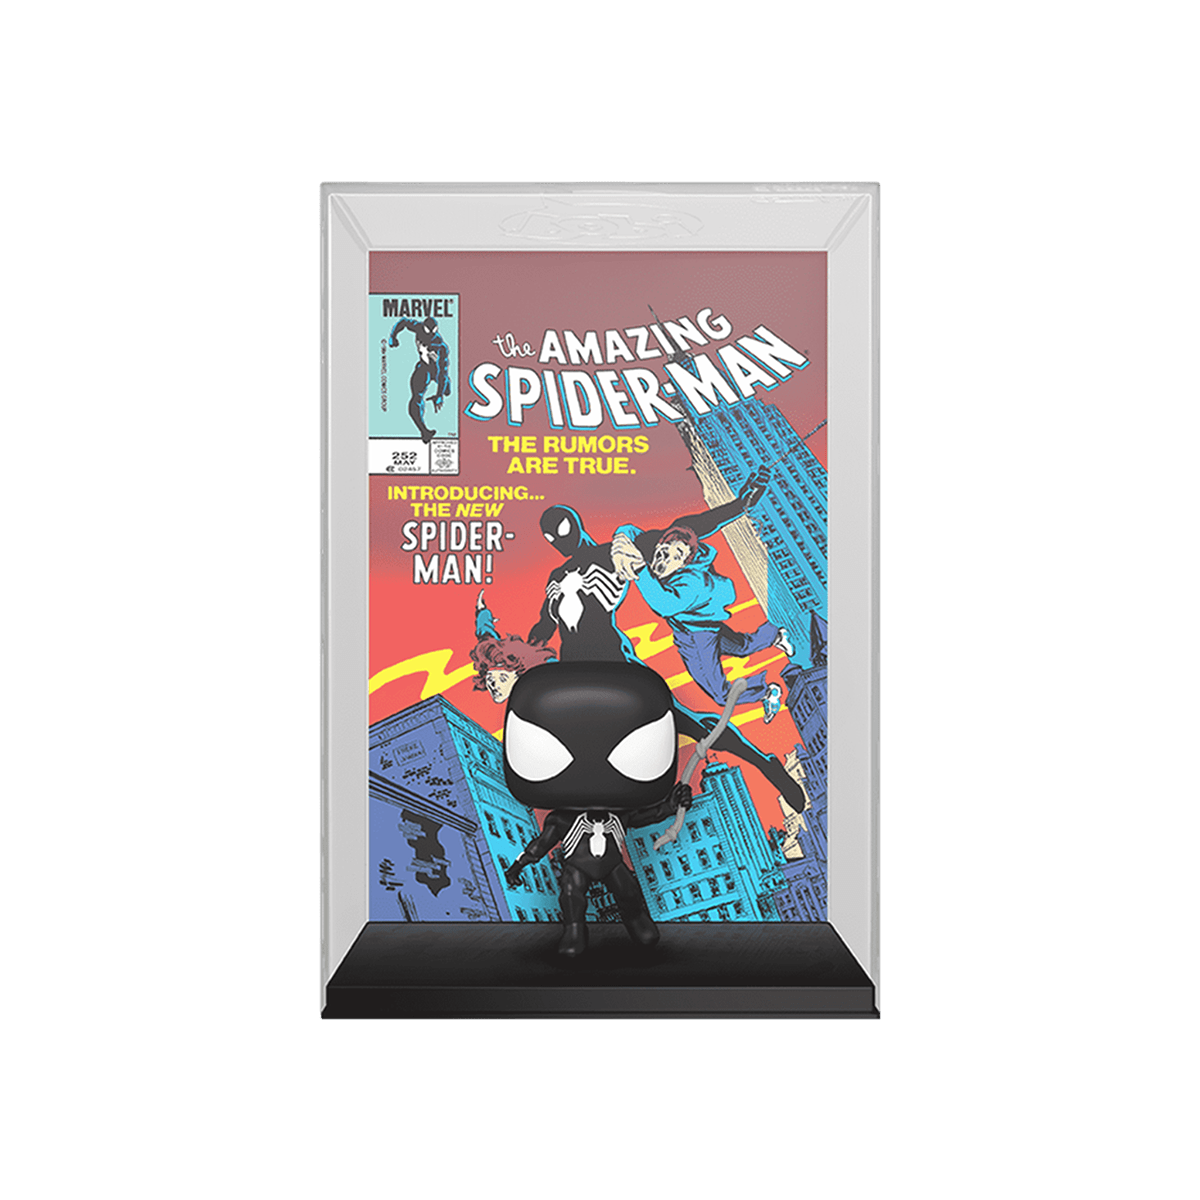 Funko POP! Comic Covers Spider-Man #40 - Marvel - Cardmaniac.ch